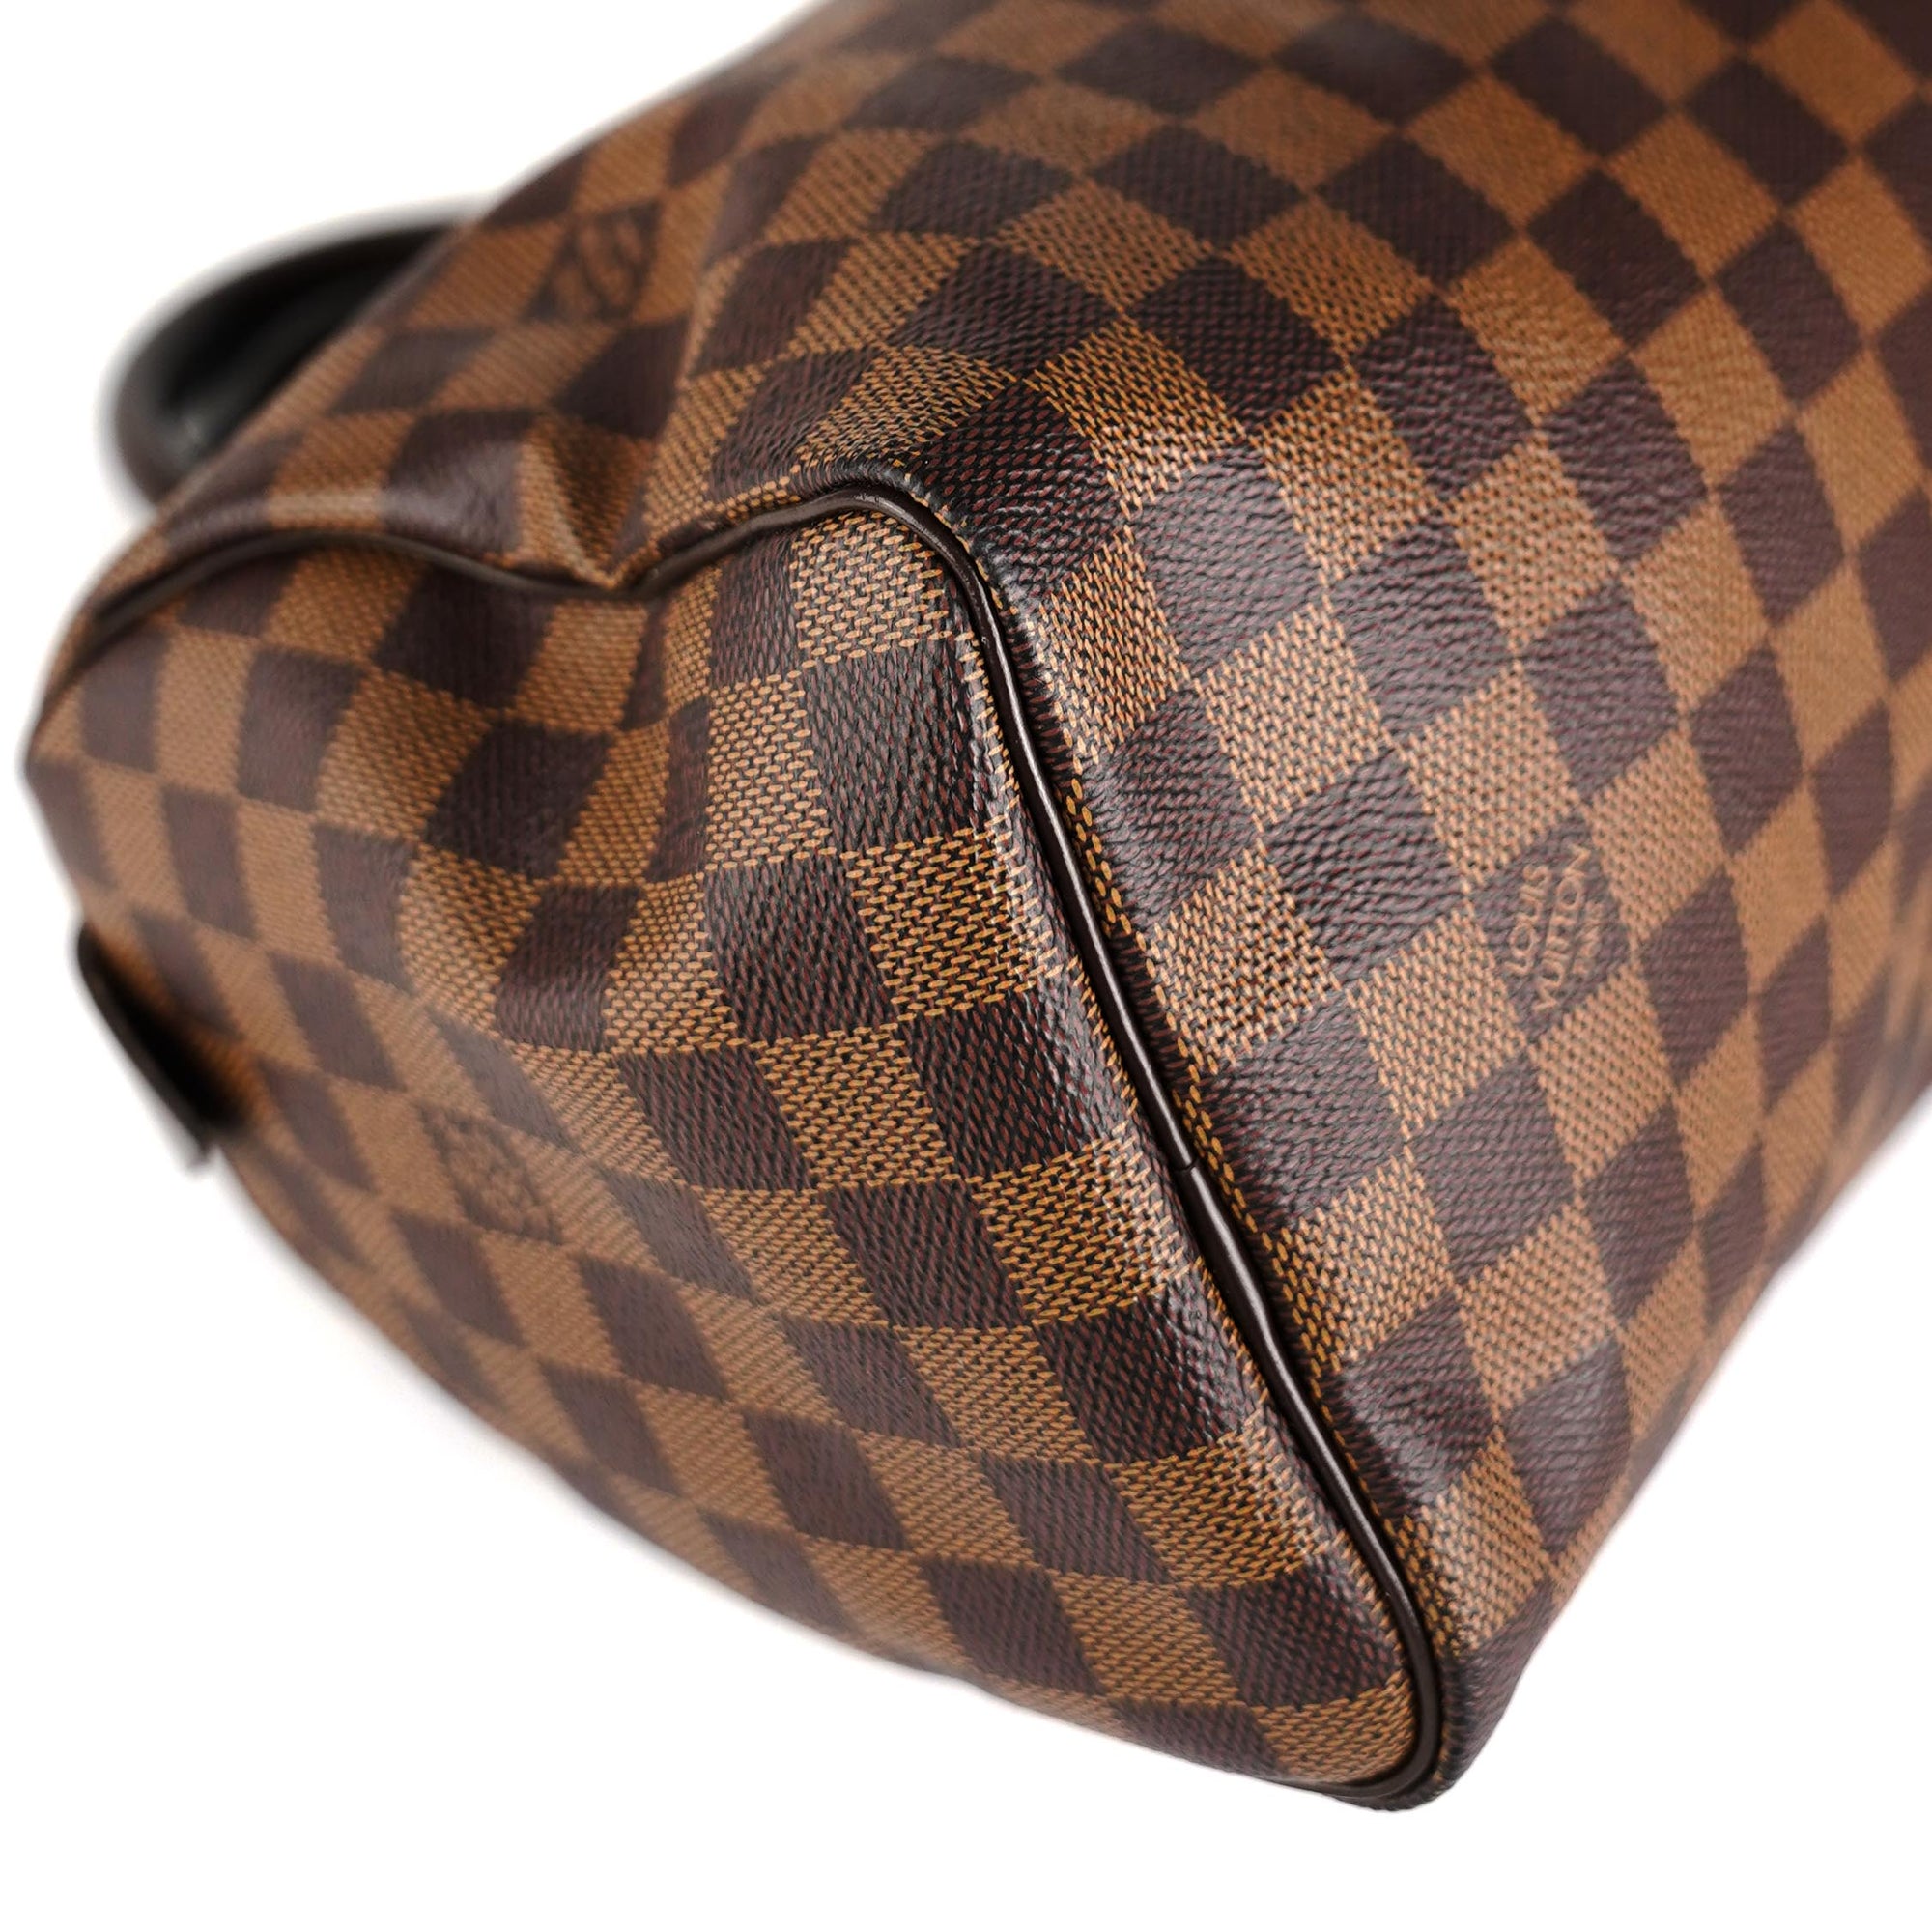 Luxury Designer Bag Investment Series: Louis Vuitton Speedy 25 Bag Review -  History, Prices 2020 • Save. Spend. Splurge.